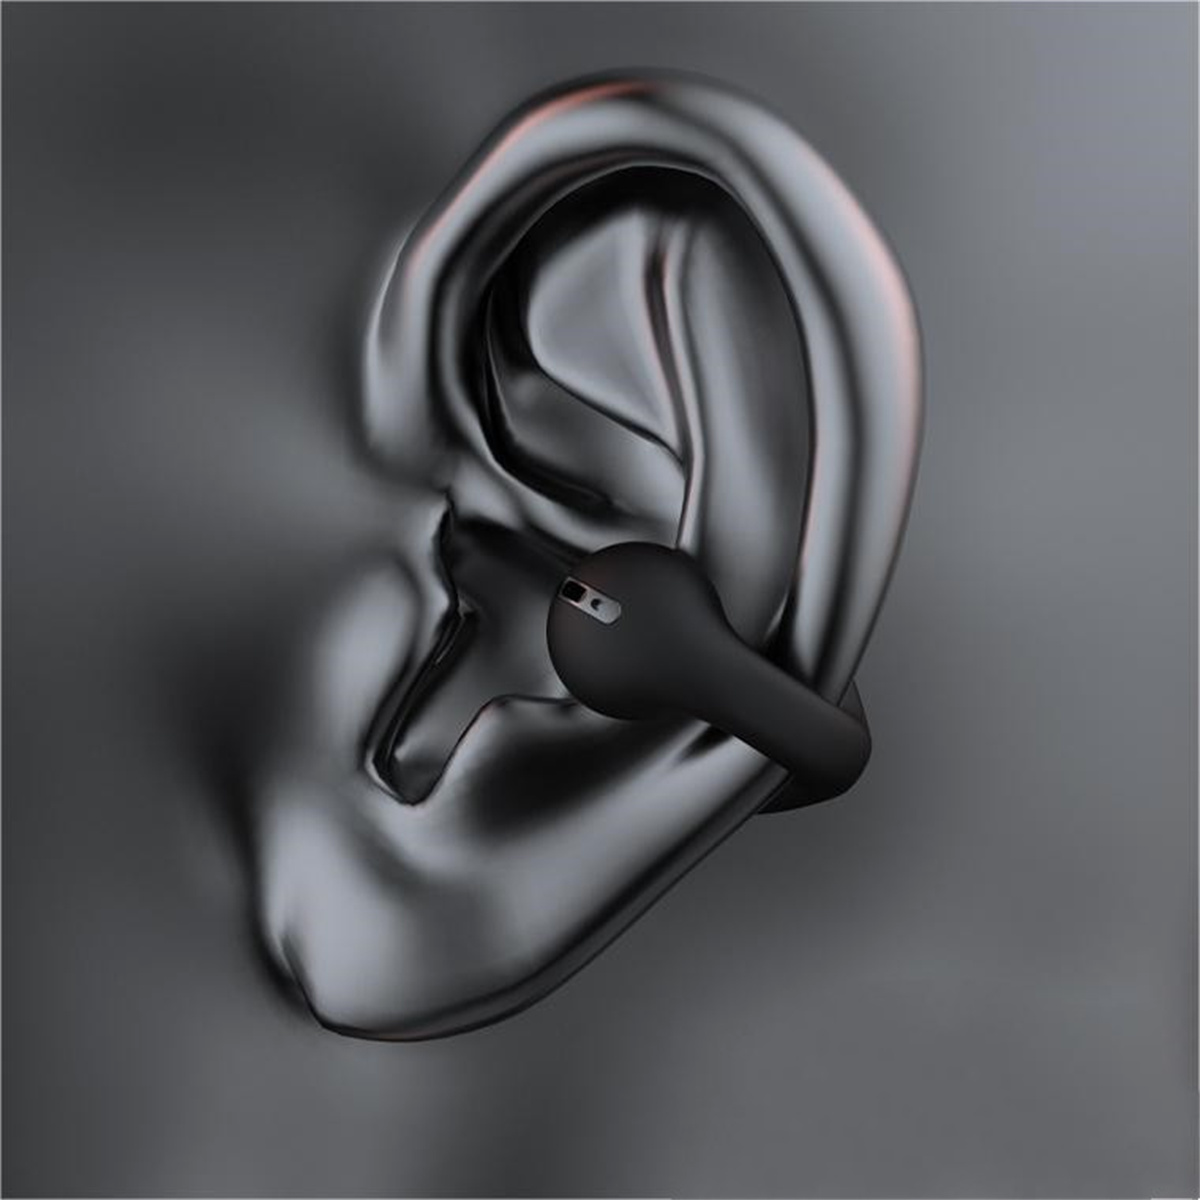 Gelb - Knochenleitung, ENBAOXIN Kopfhörer Bluetooth-Headset schmerzfreies On-ear Gelbes Bluetooth drahtloses Tragen, HD-Klangqualität, Bluetooth